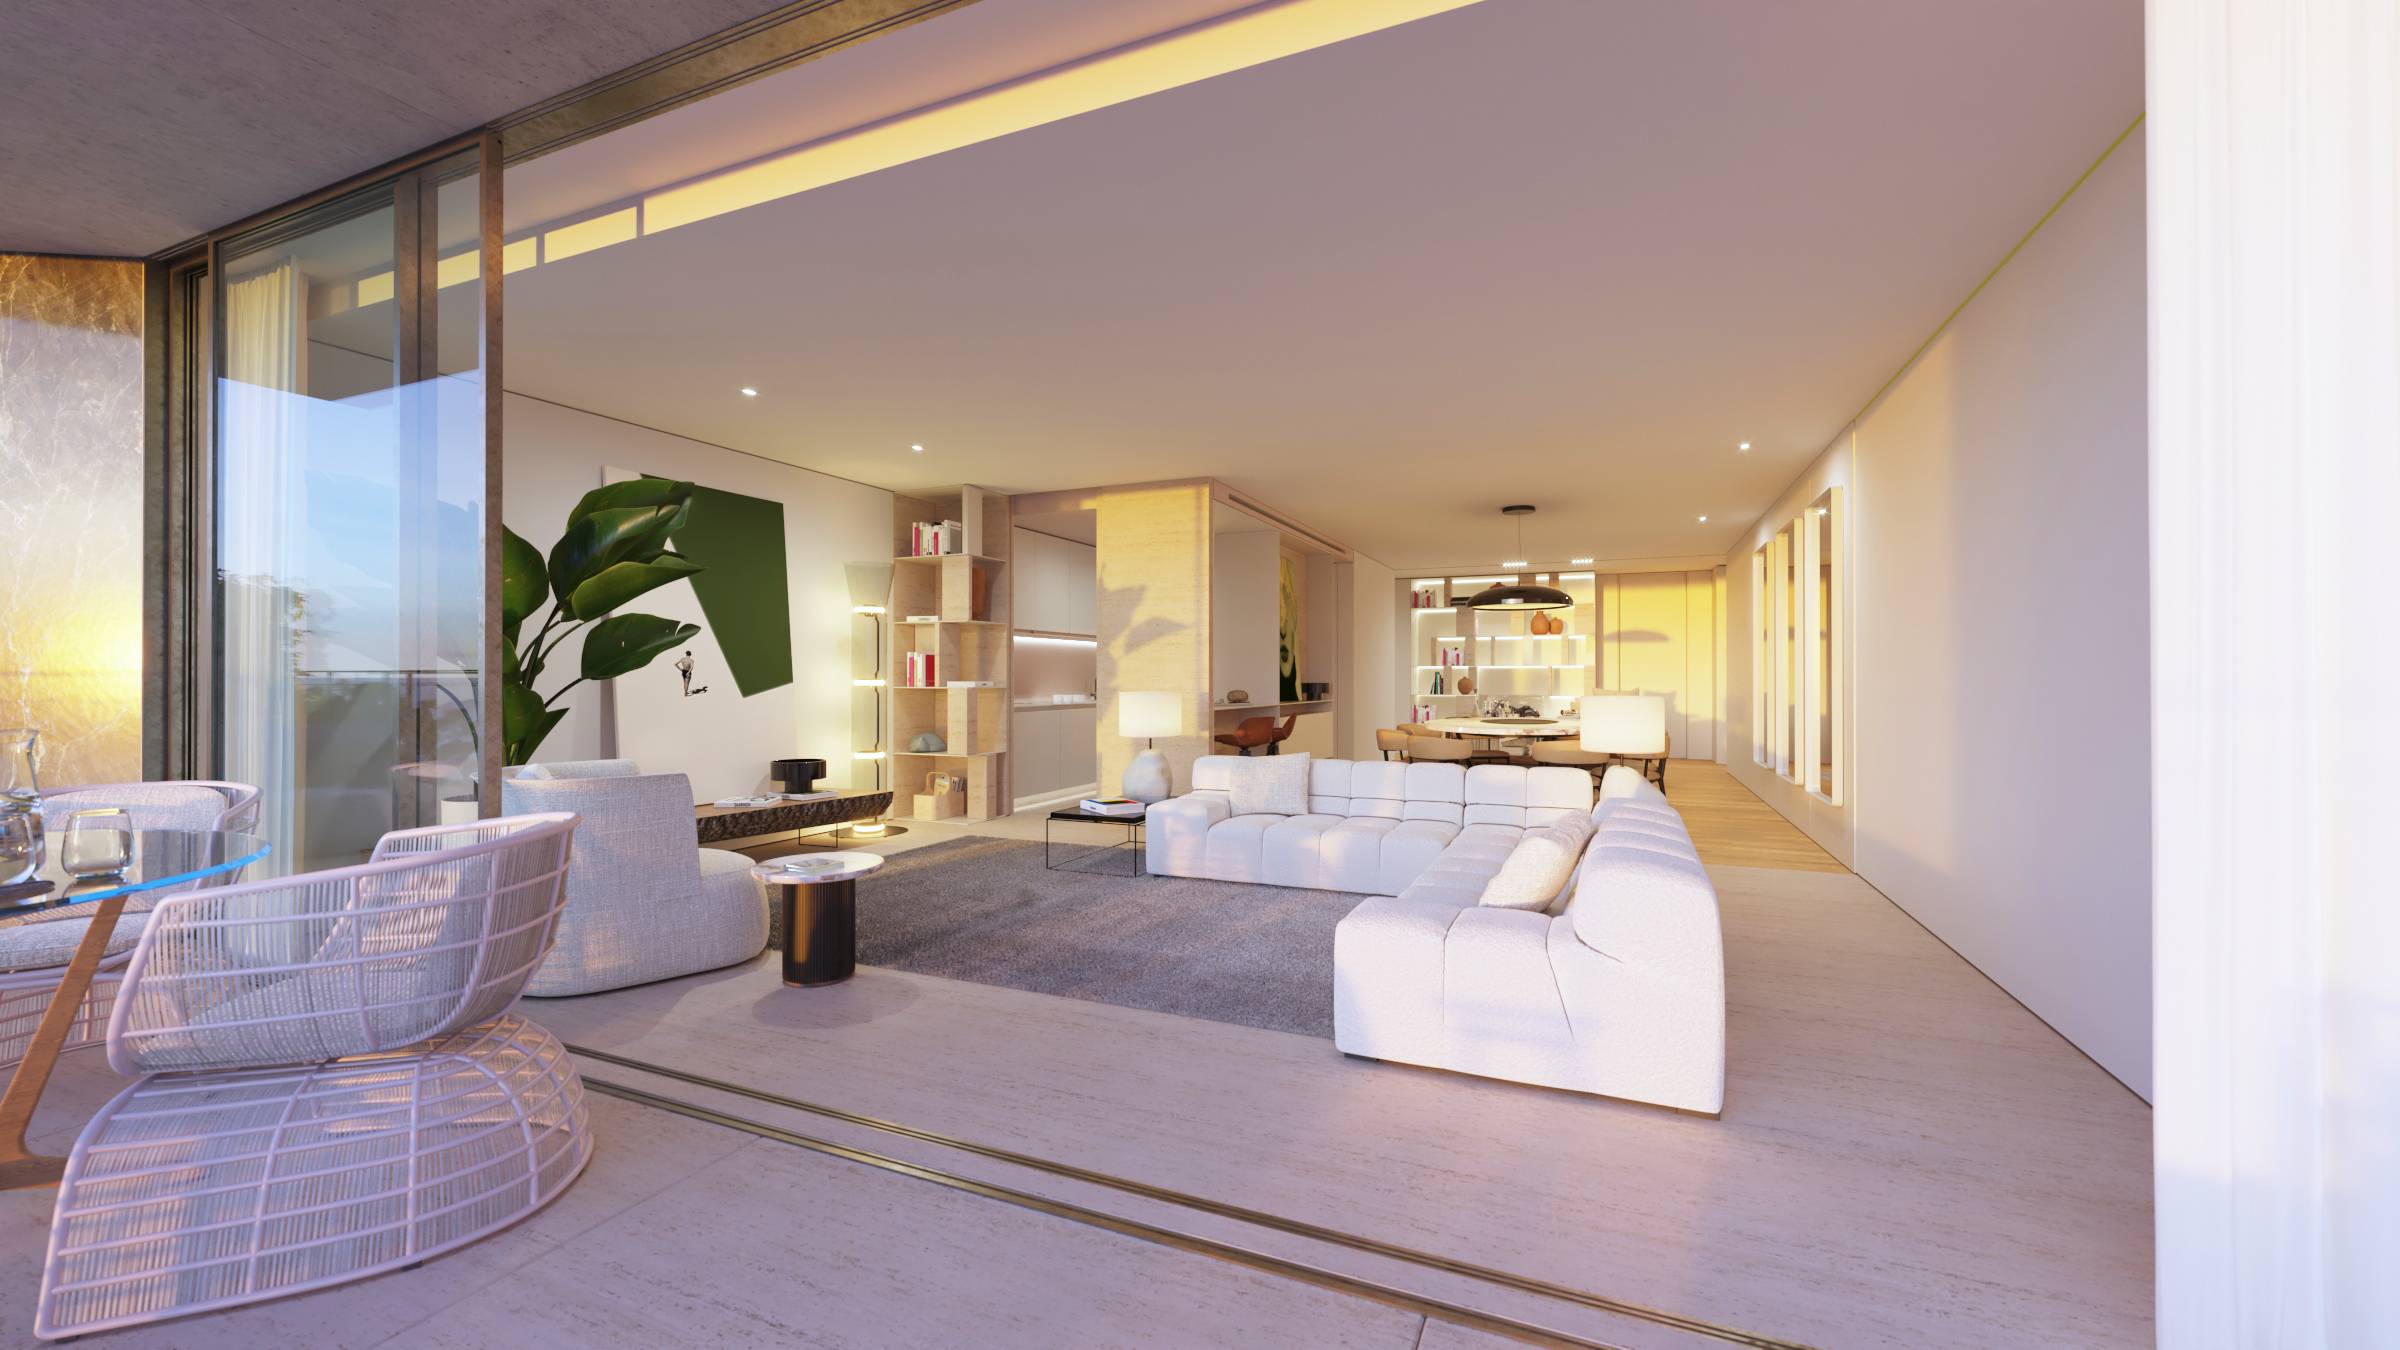 Savoy Monumentalis - Luxury 4 Bedroom Ocean Front Apartments- Funchal - Madeira Island